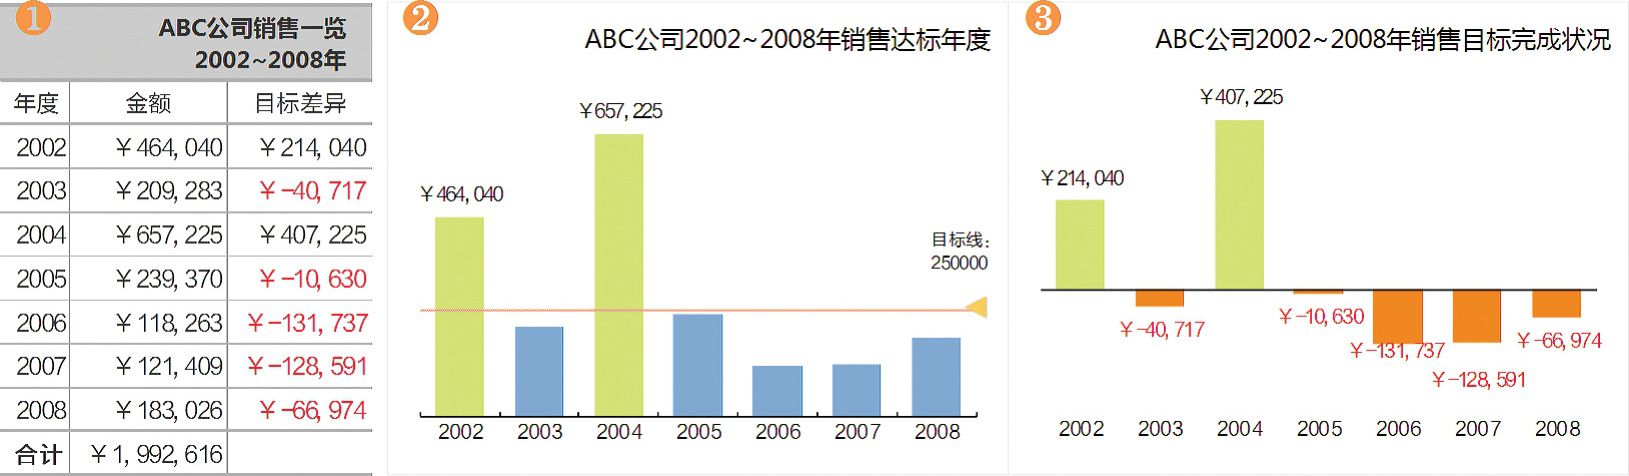 ABC公司2002～2008年销售金额两种目标与实际比较图